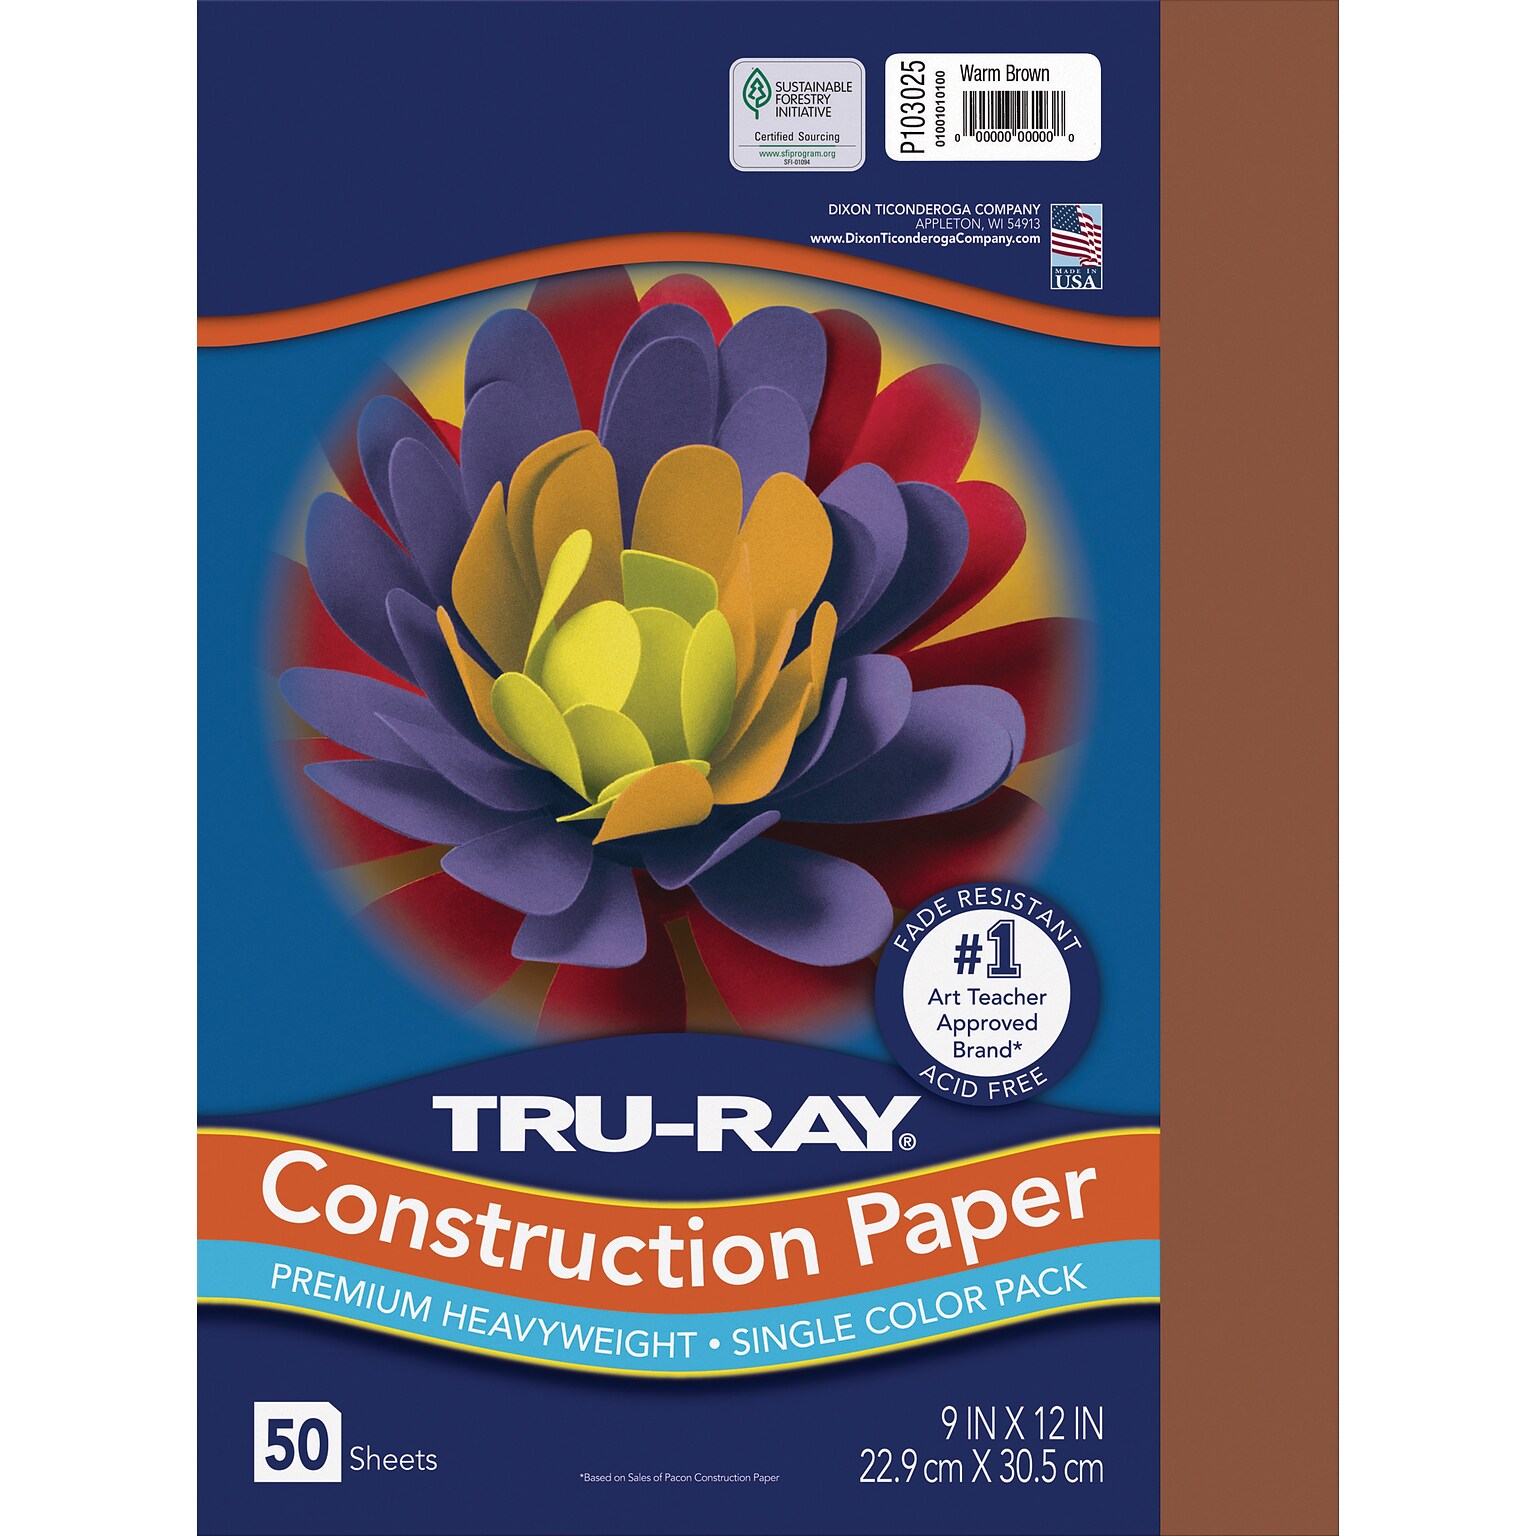 Tru-Ray 9 x 12 Construction Paper, Warm Brown, 50 Sheets (P103025)